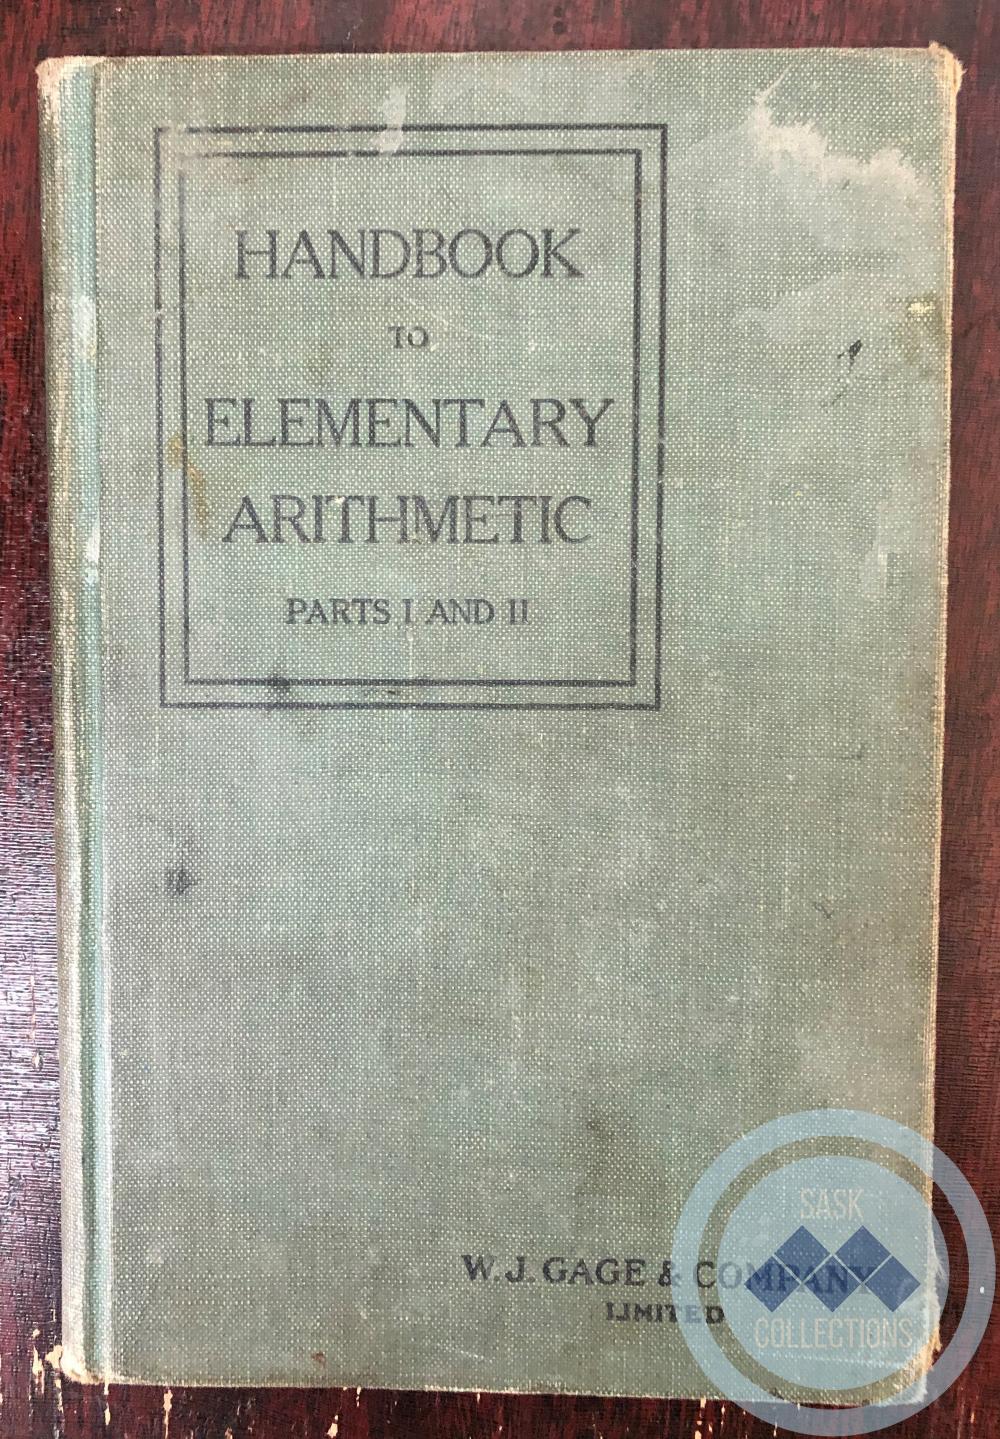 Handbook to Elementary Arithmetic